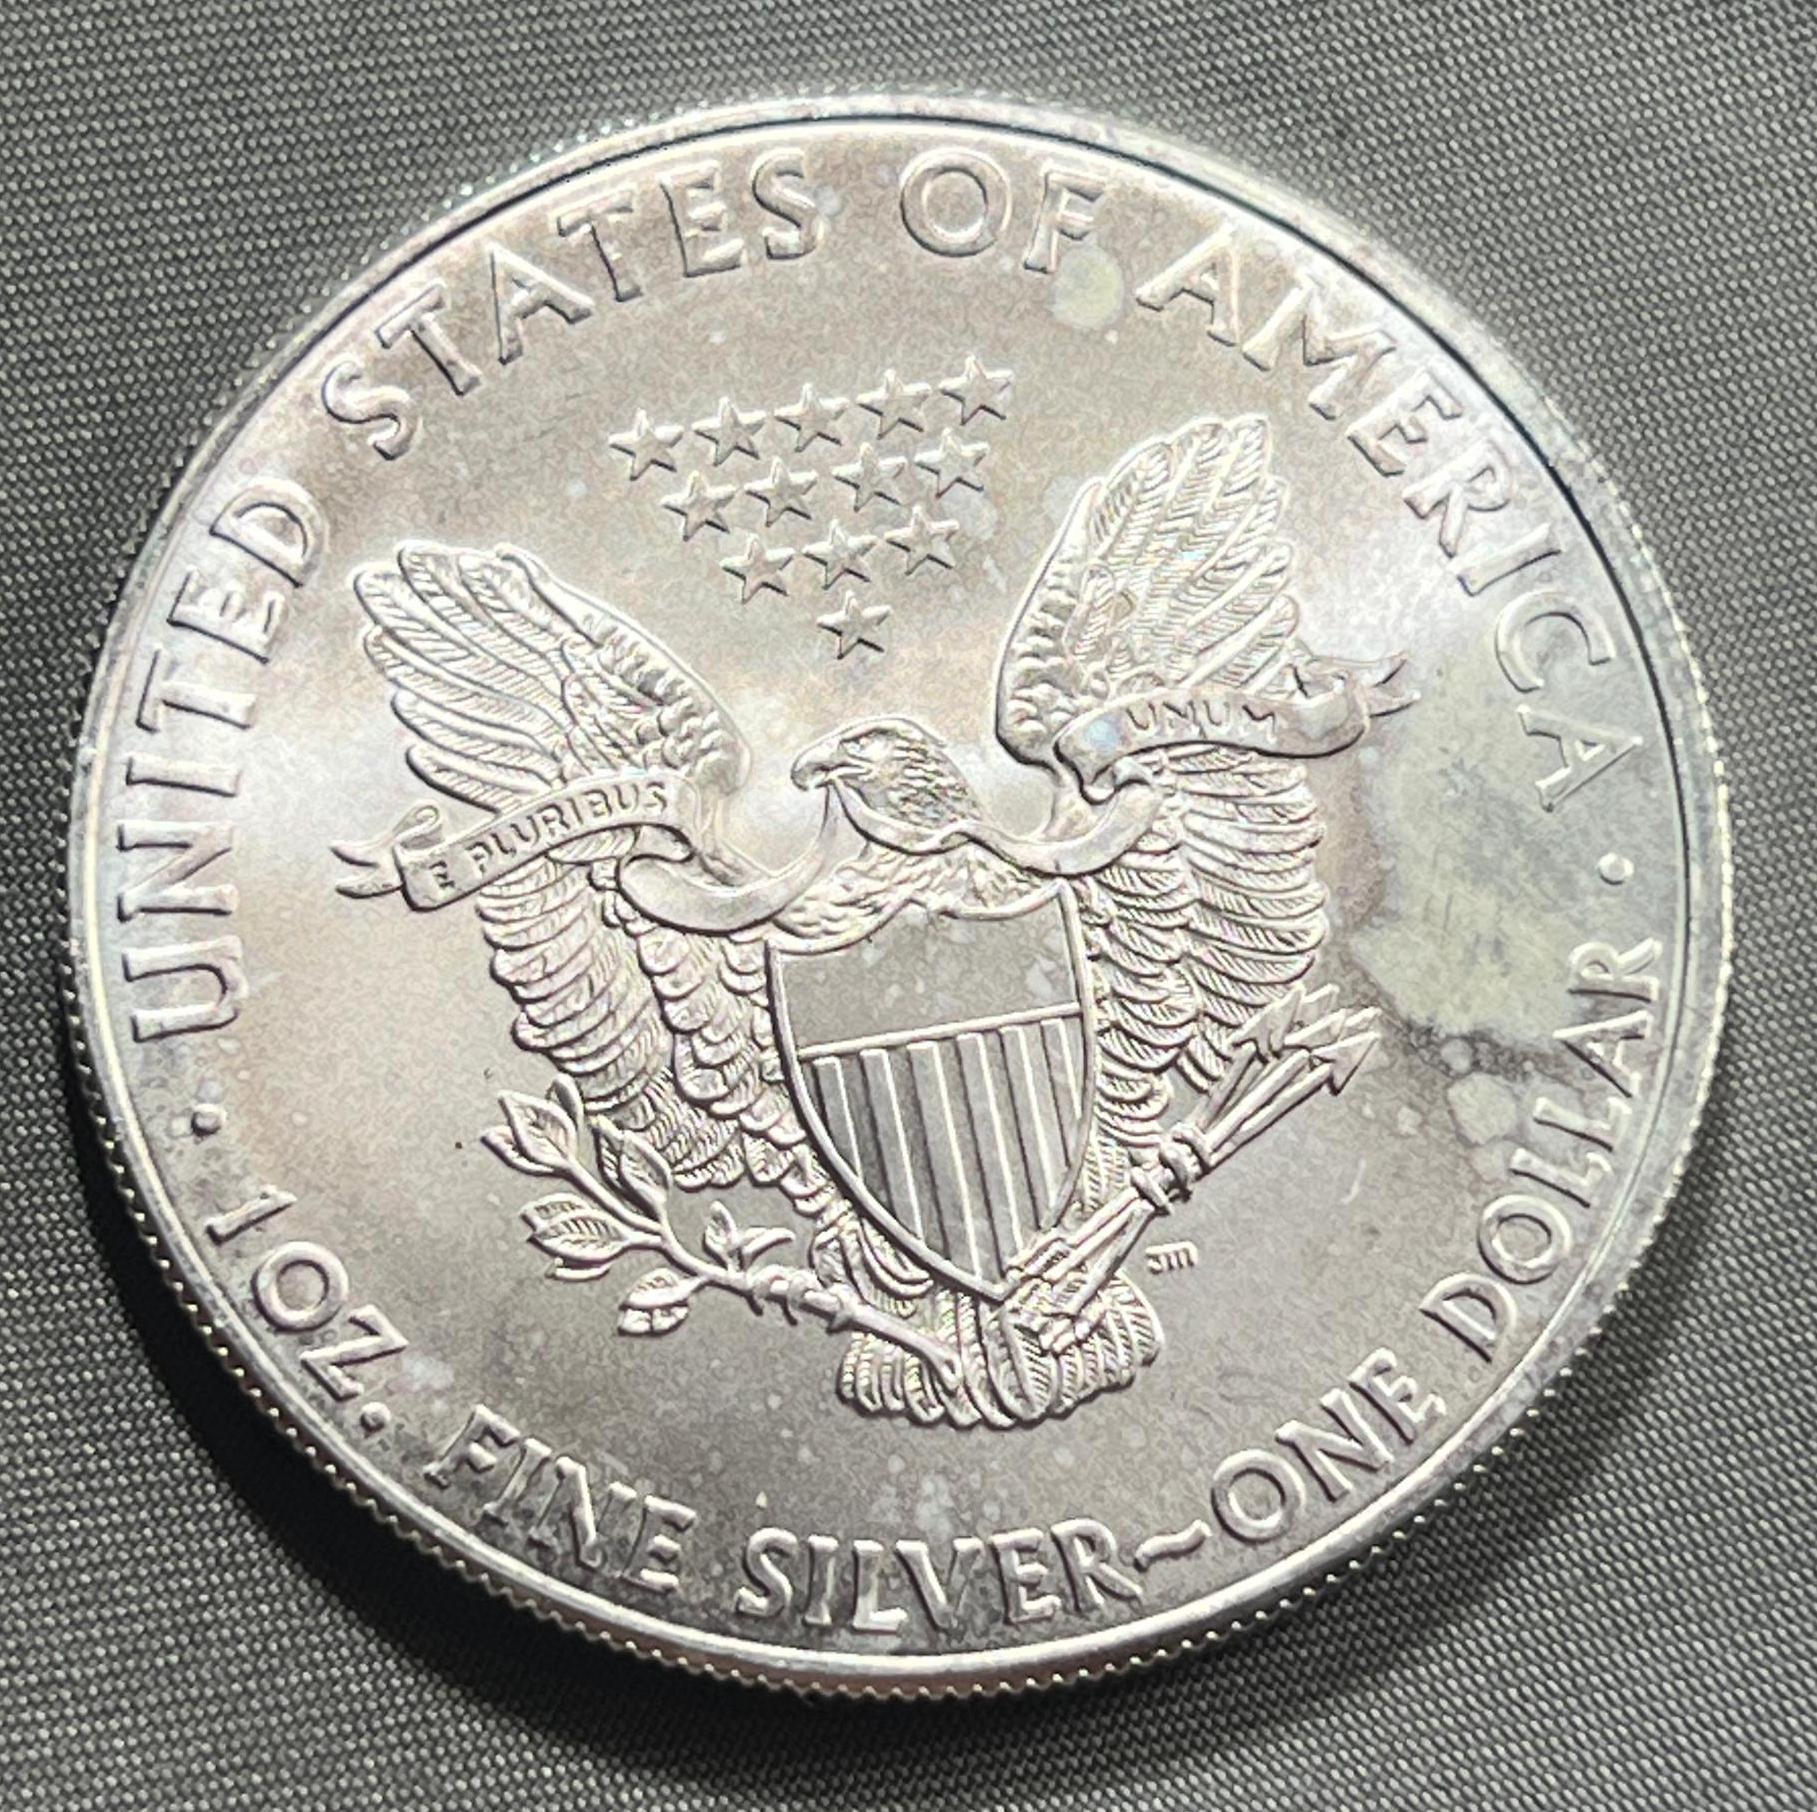 2009 US Silver Eagle Dollar Coin, .999 Fine Silver